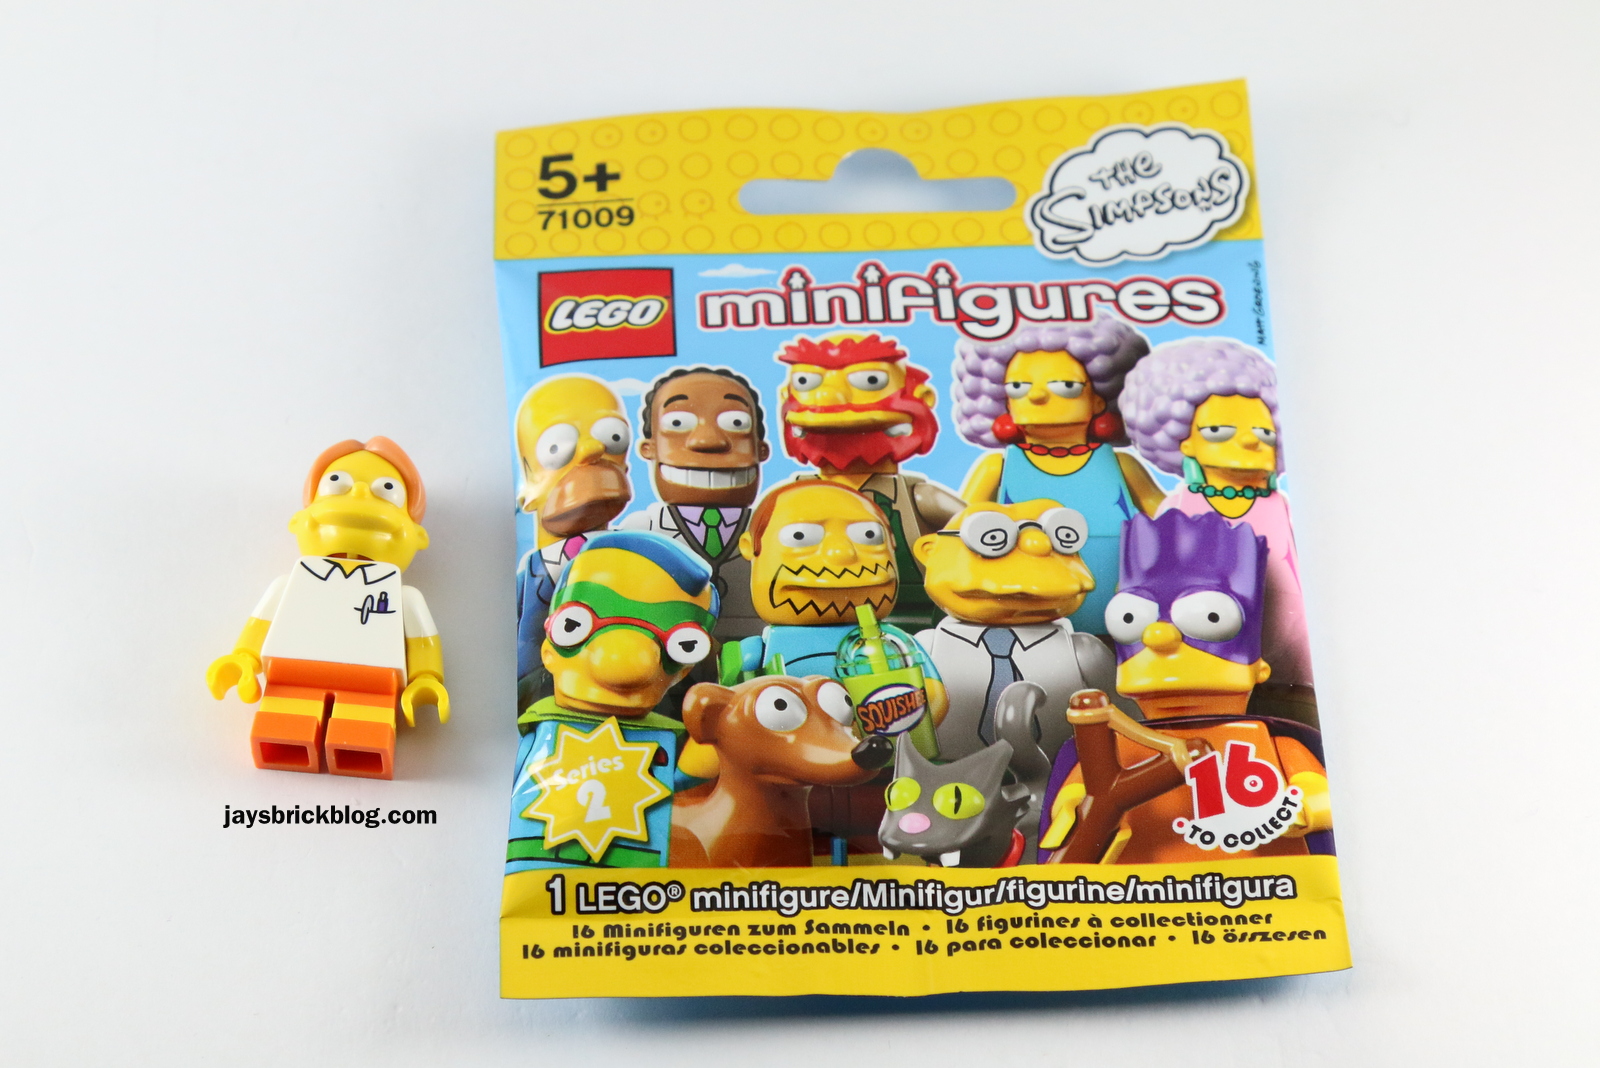 Lego minifigures simpsons series 1 unopened sealed random mystery blind bags 